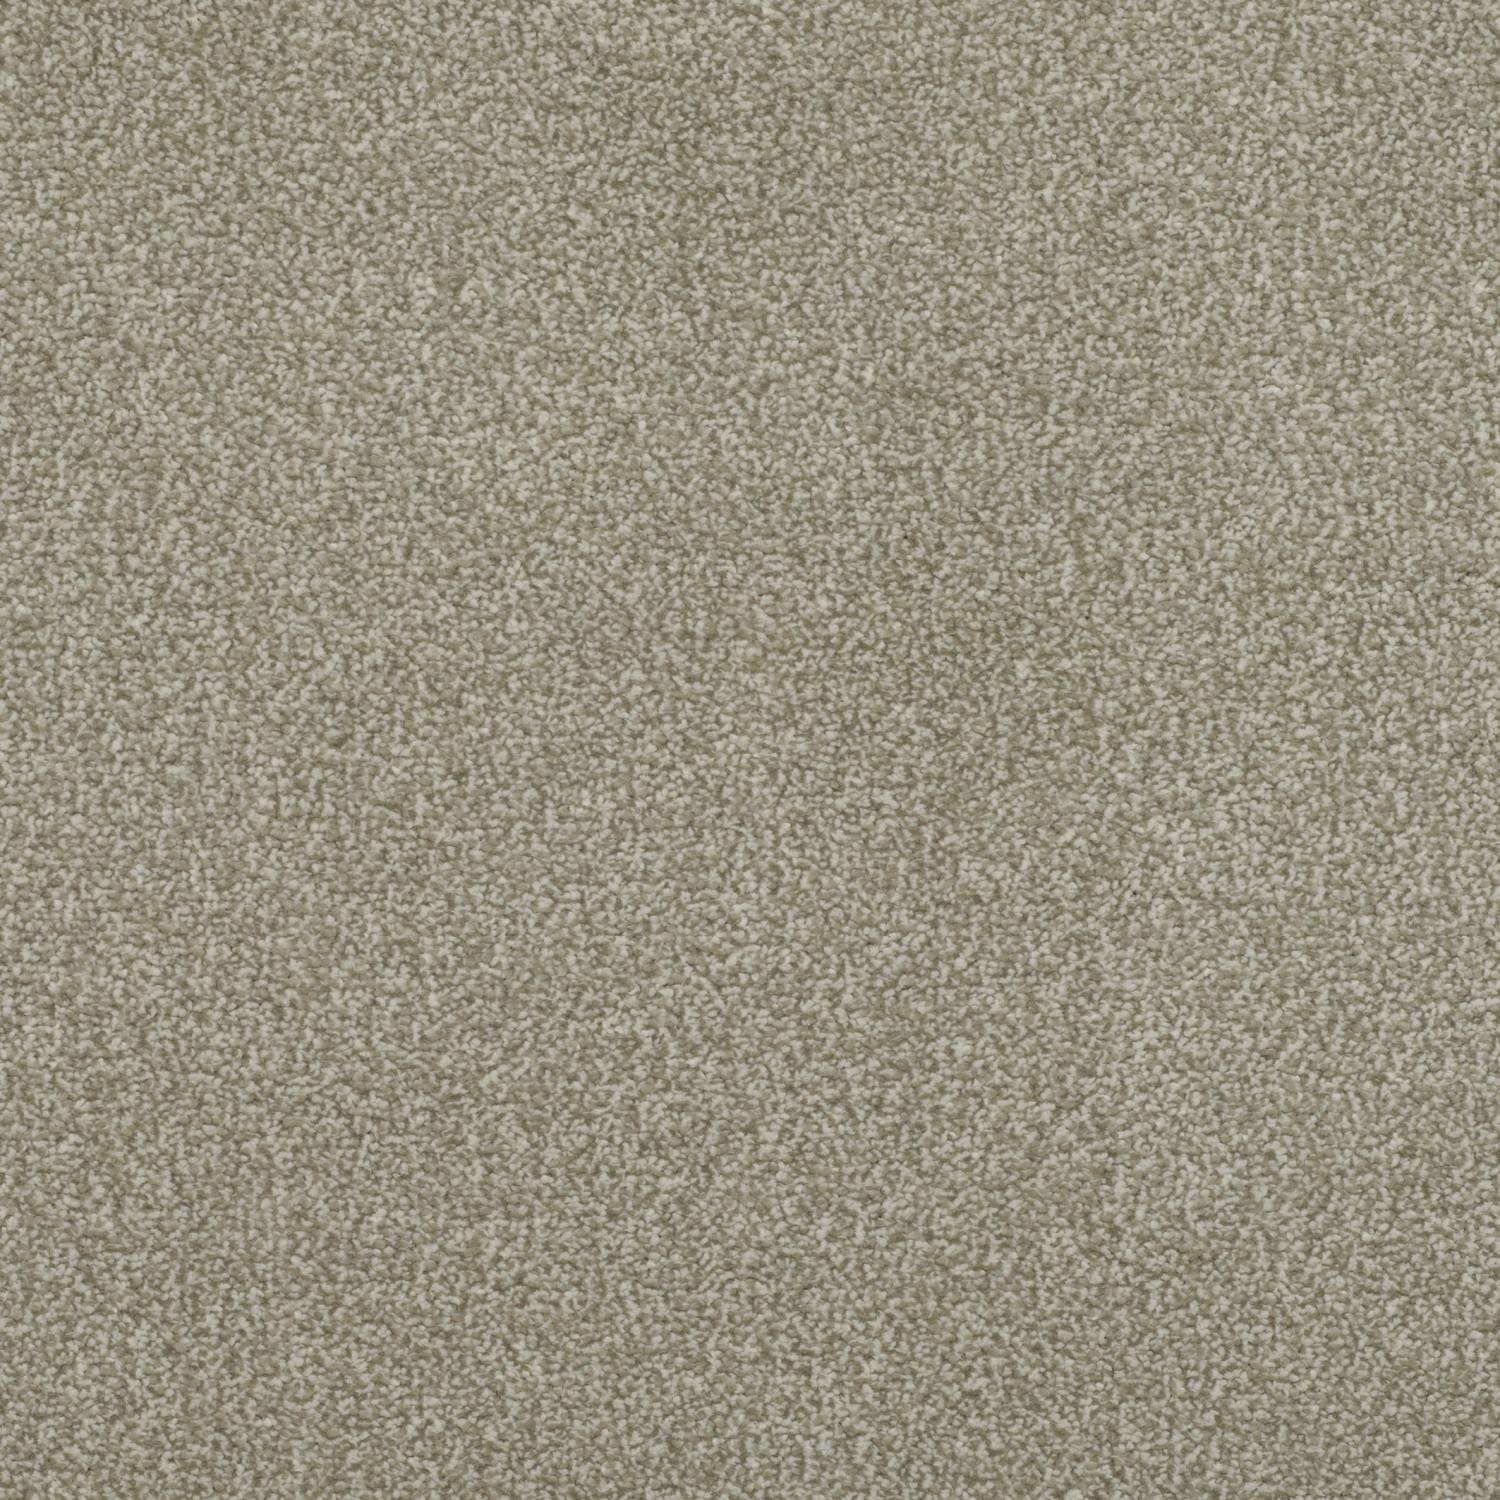 Obsession Twist Luxury Deep Pile Carpet - 174 Silver Birch